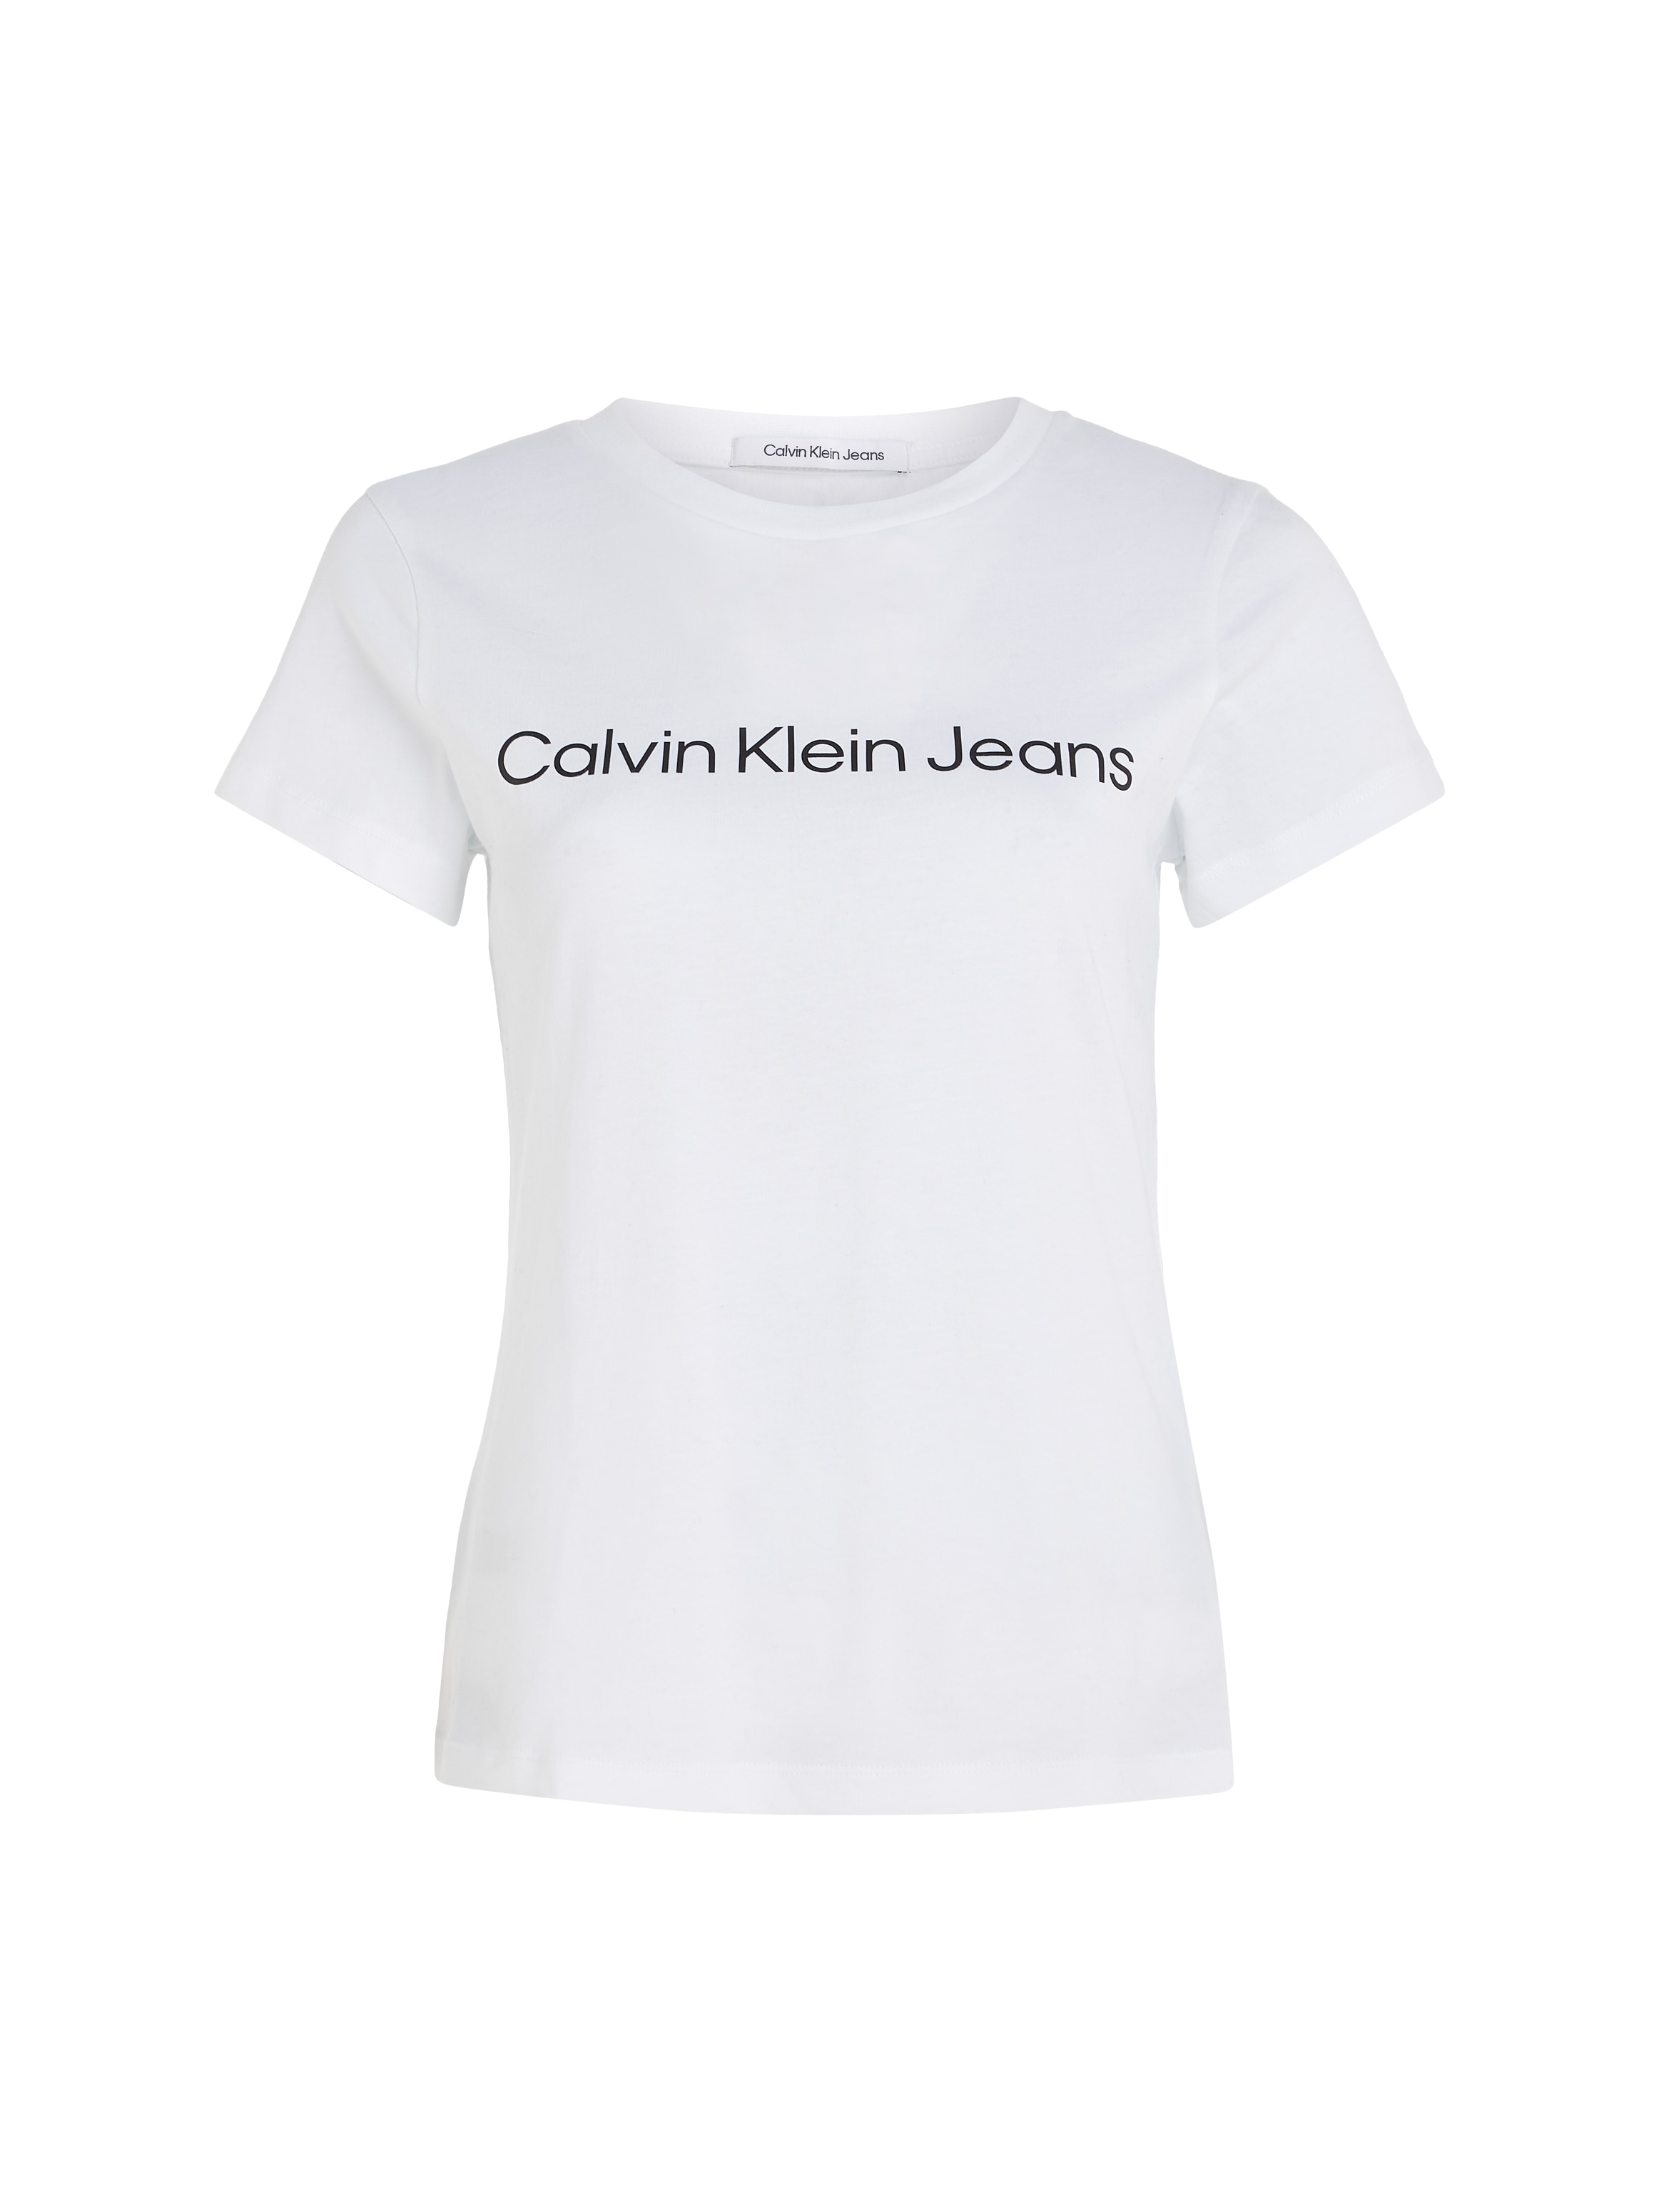 LOGO Logoschriftzug ♕ FIT bei SLIM mit INSTIT »CORE Calvin T-Shirt CK- Jeans TEE«, Klein